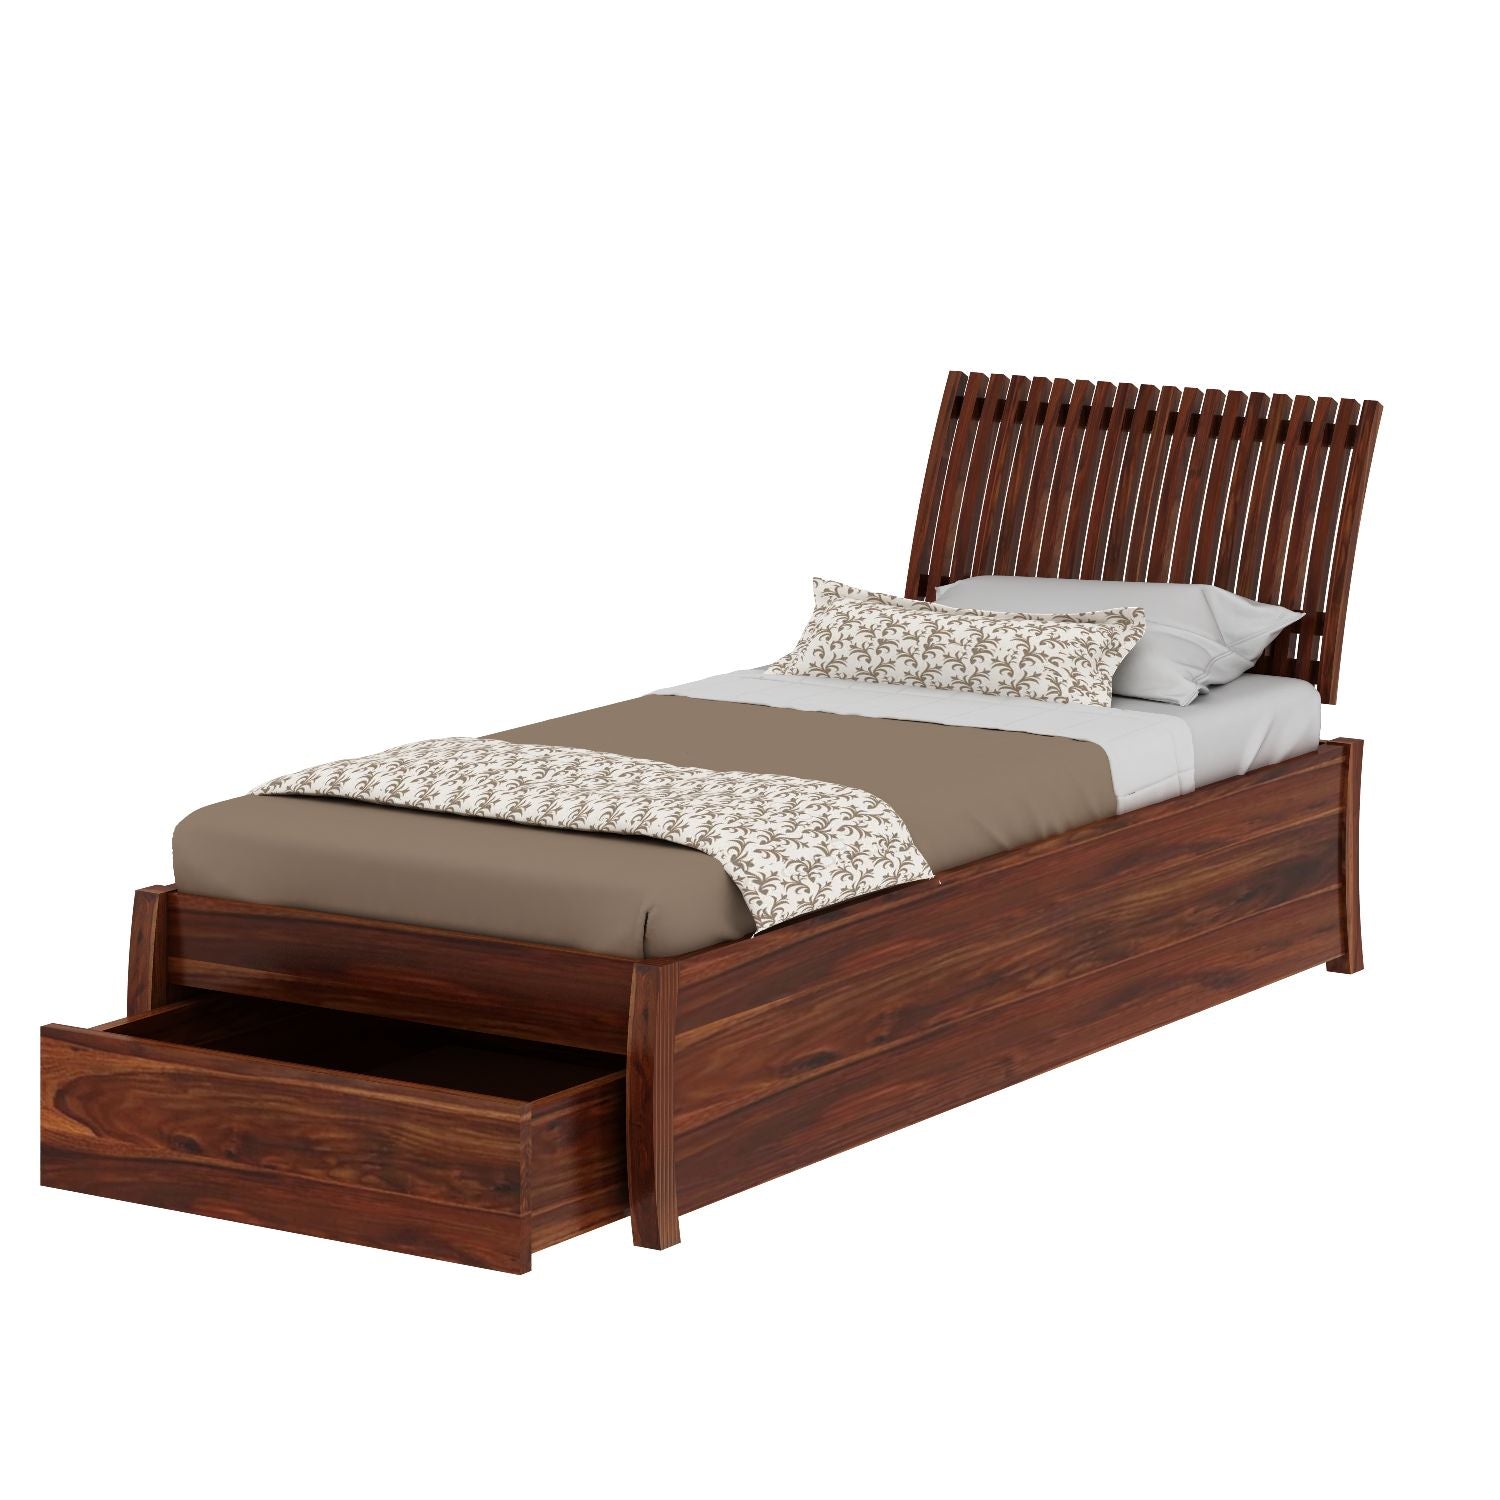 Dumdum Solid Sheesham Wood Single Bed With Drawer Storage (Natural Finish)